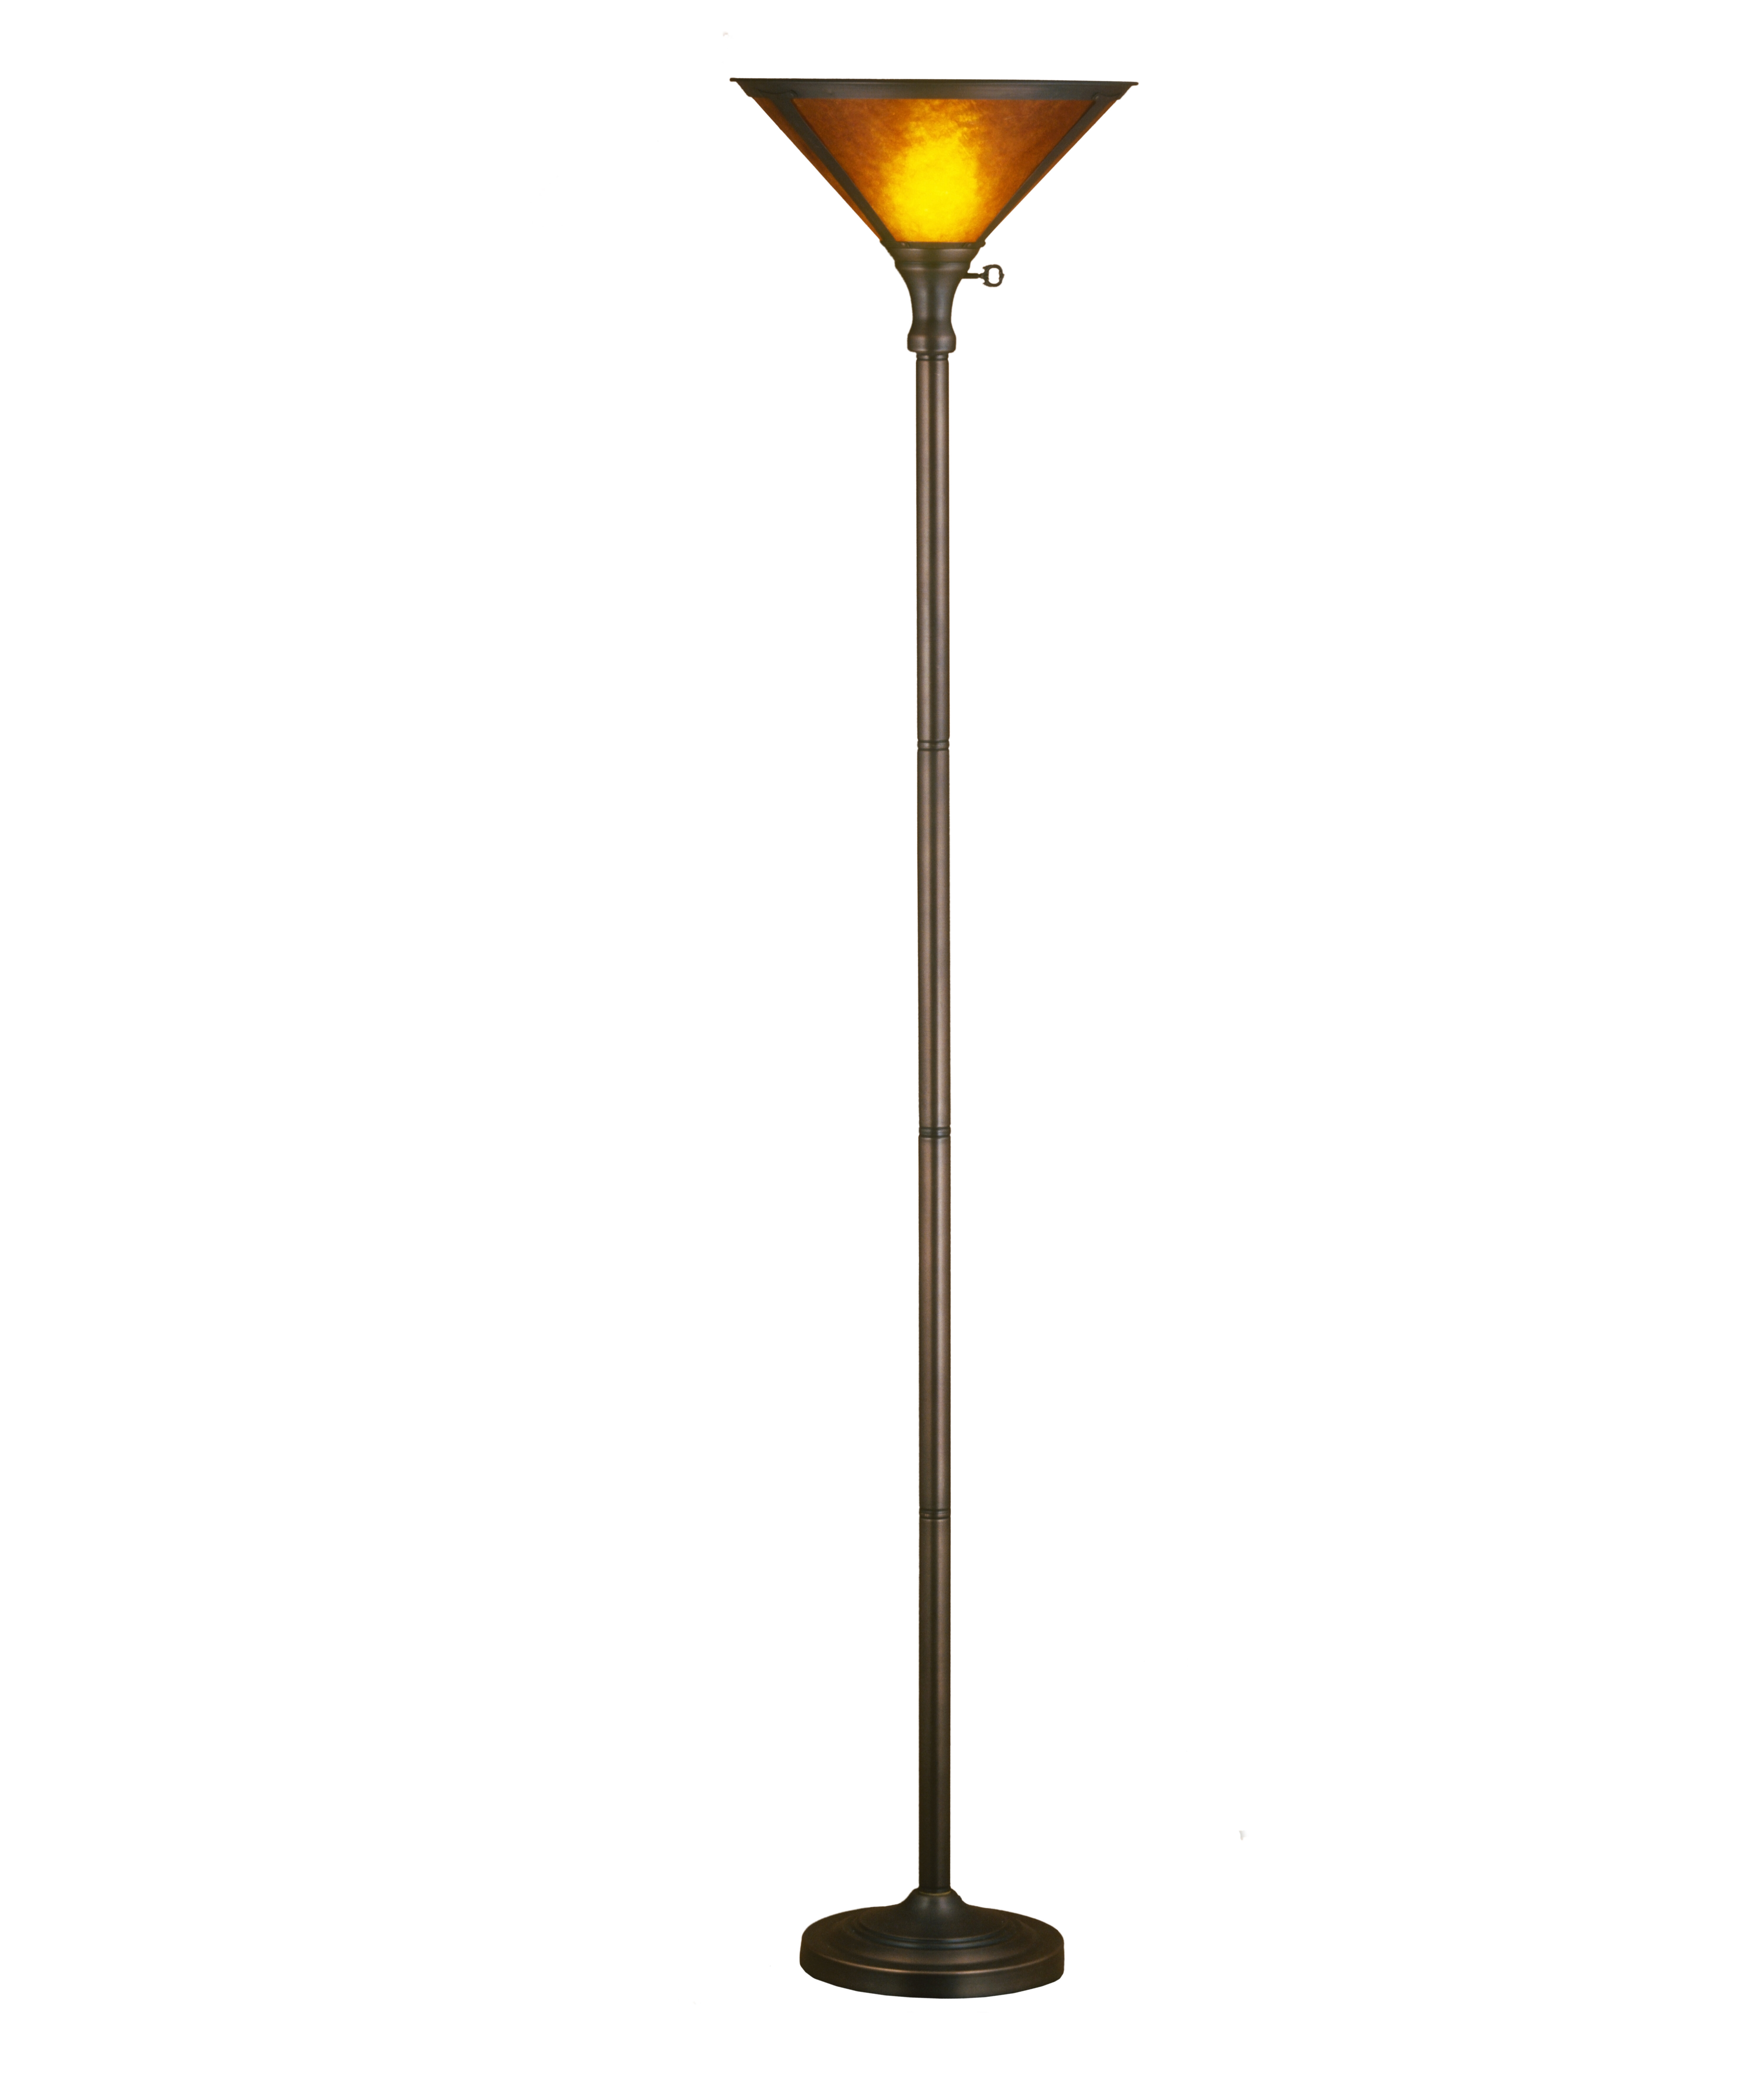 Van Erp Amber Mica 72 Torchiere Floor Lamp with regard to dimensions 5992 X 7056